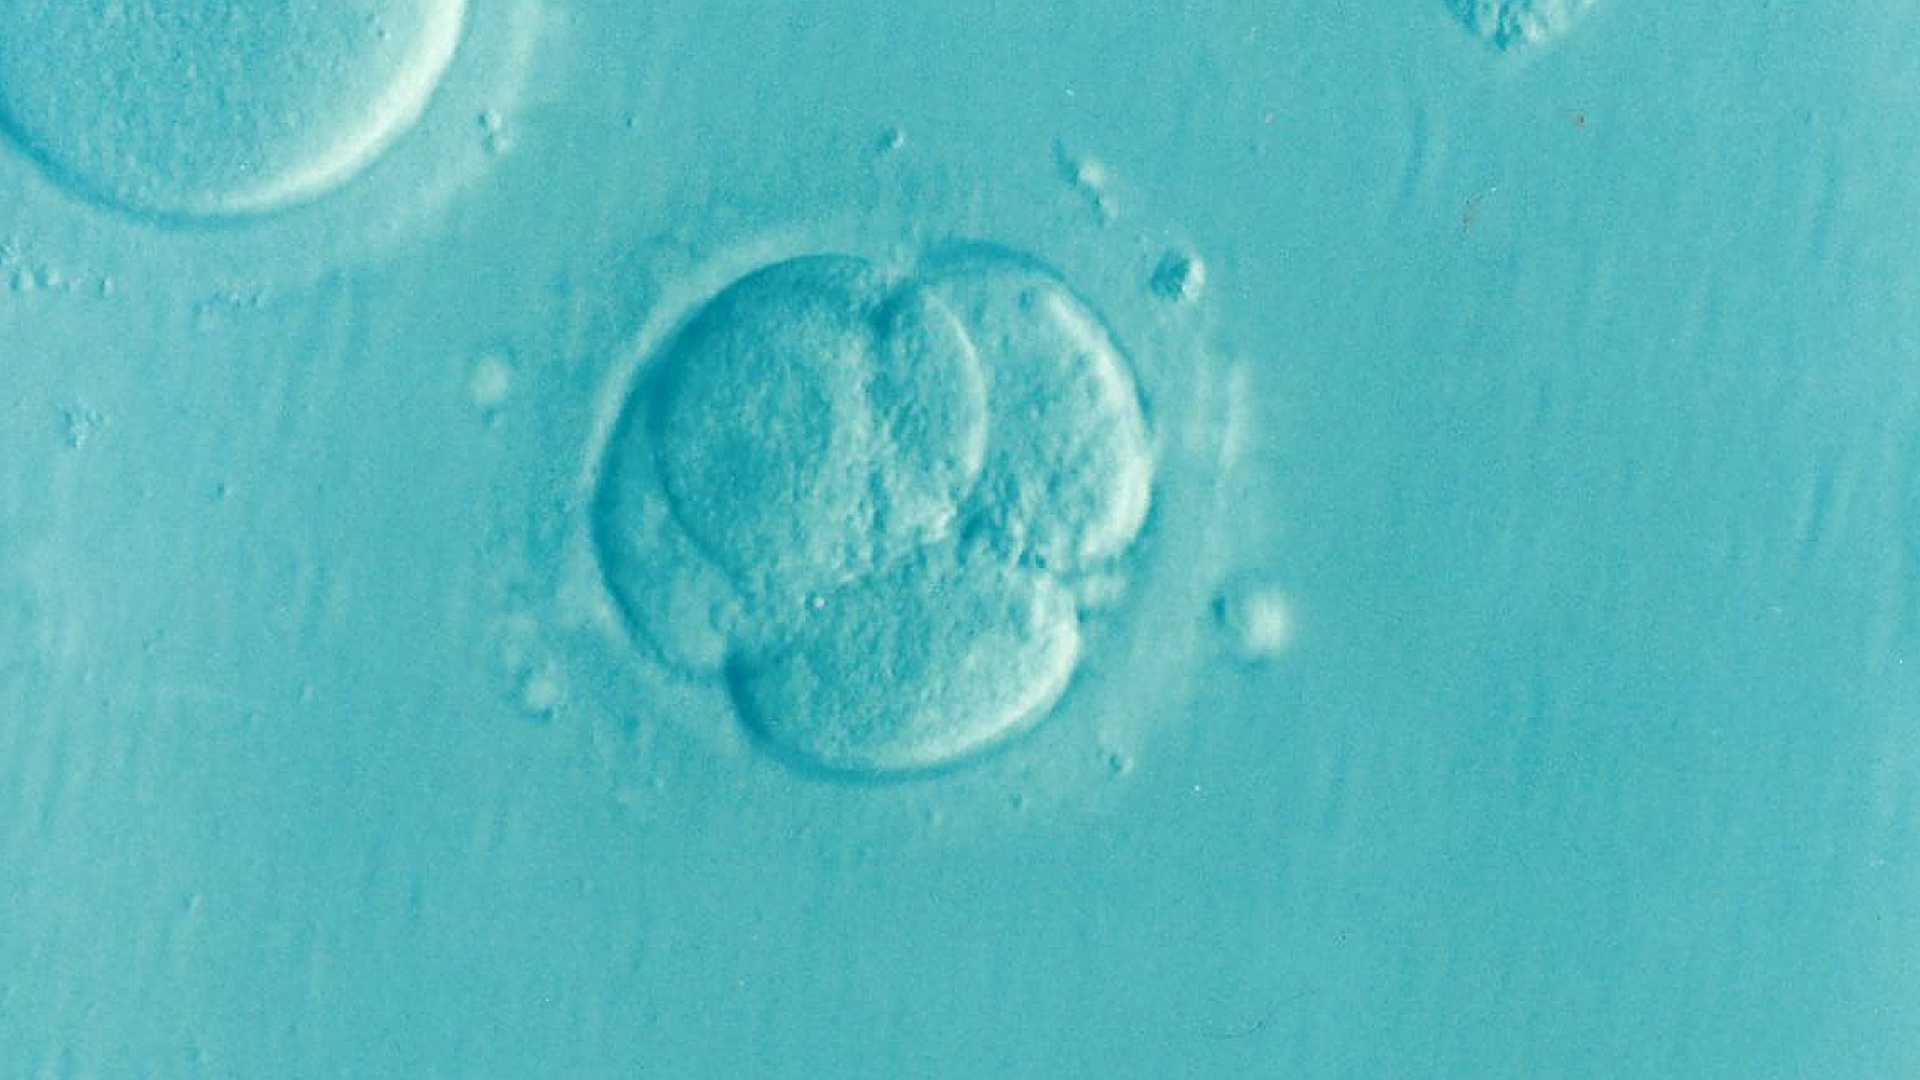 embryo-1514192_1920.png